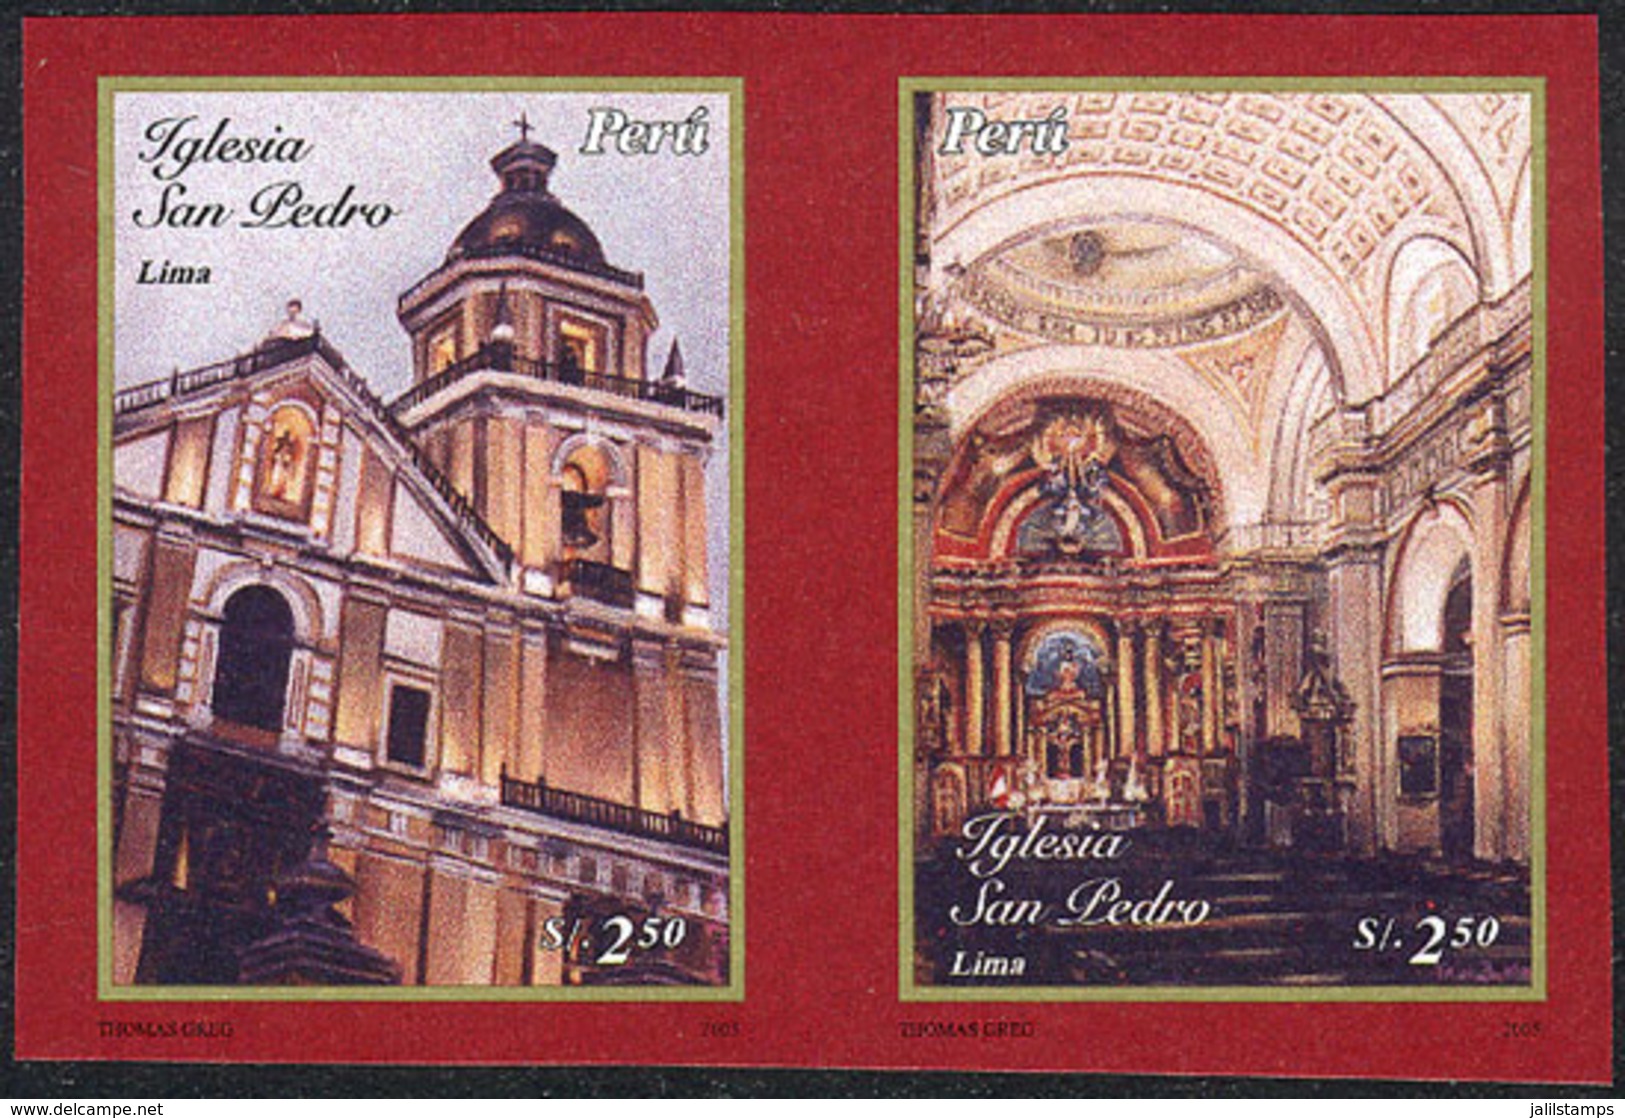 PERU: Sc.1493, 2006 Church Of San Pedro In Lima, IMPERFORATE Set In Pair, Excellent Quality, Rare! - Peru